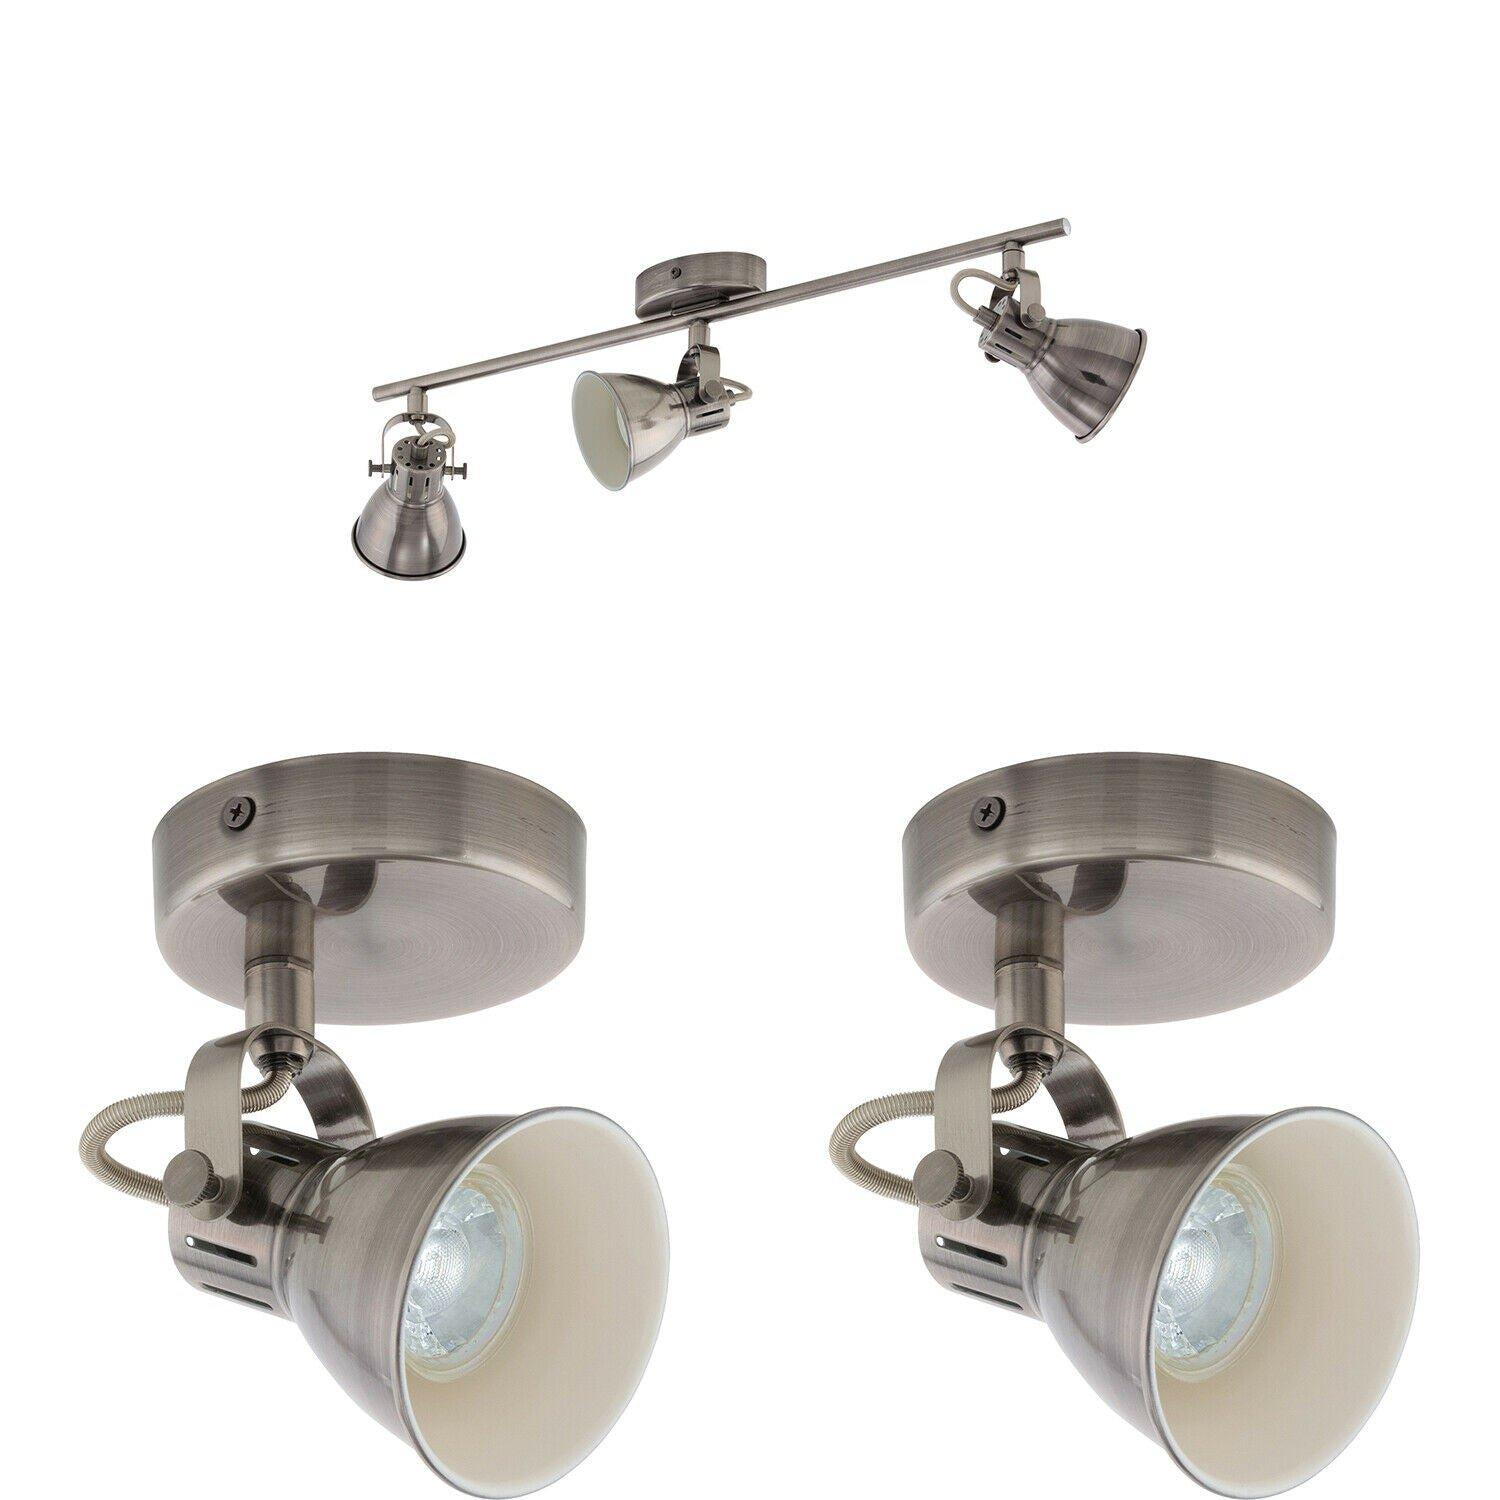 Ceiling Spot Light & 2x Matching Wall Lights Antique Nickel Adjustable Shade